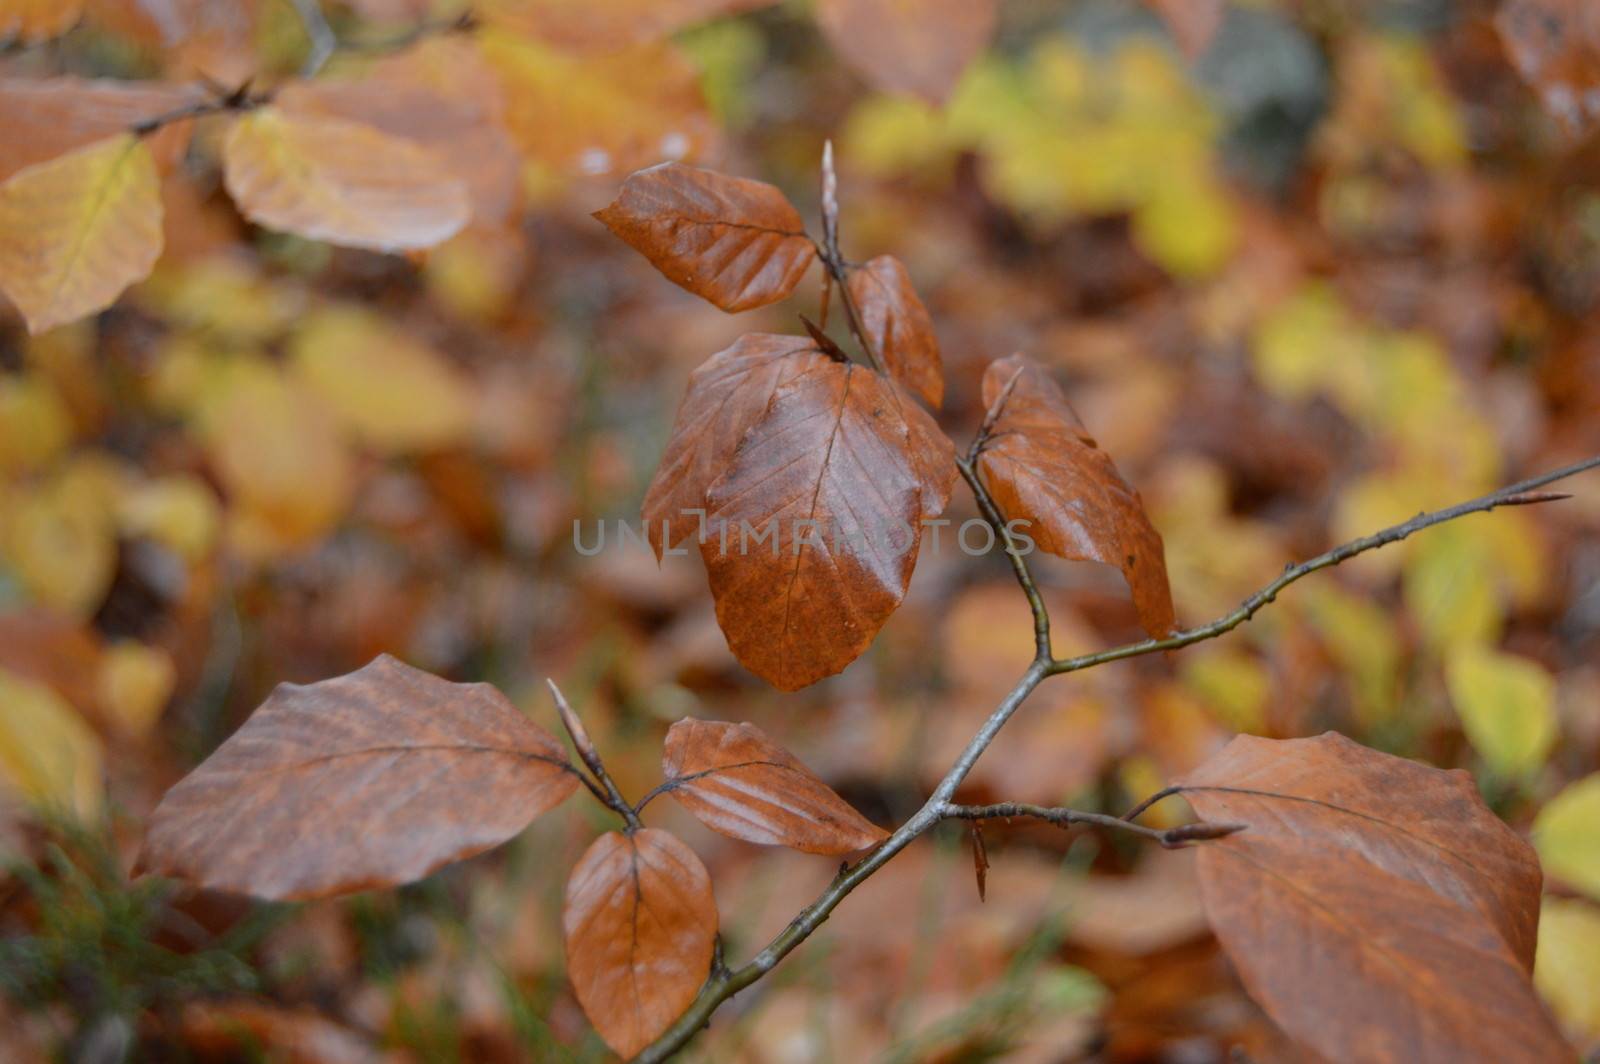 Autumn leaf by Meretemy@hotmail.com